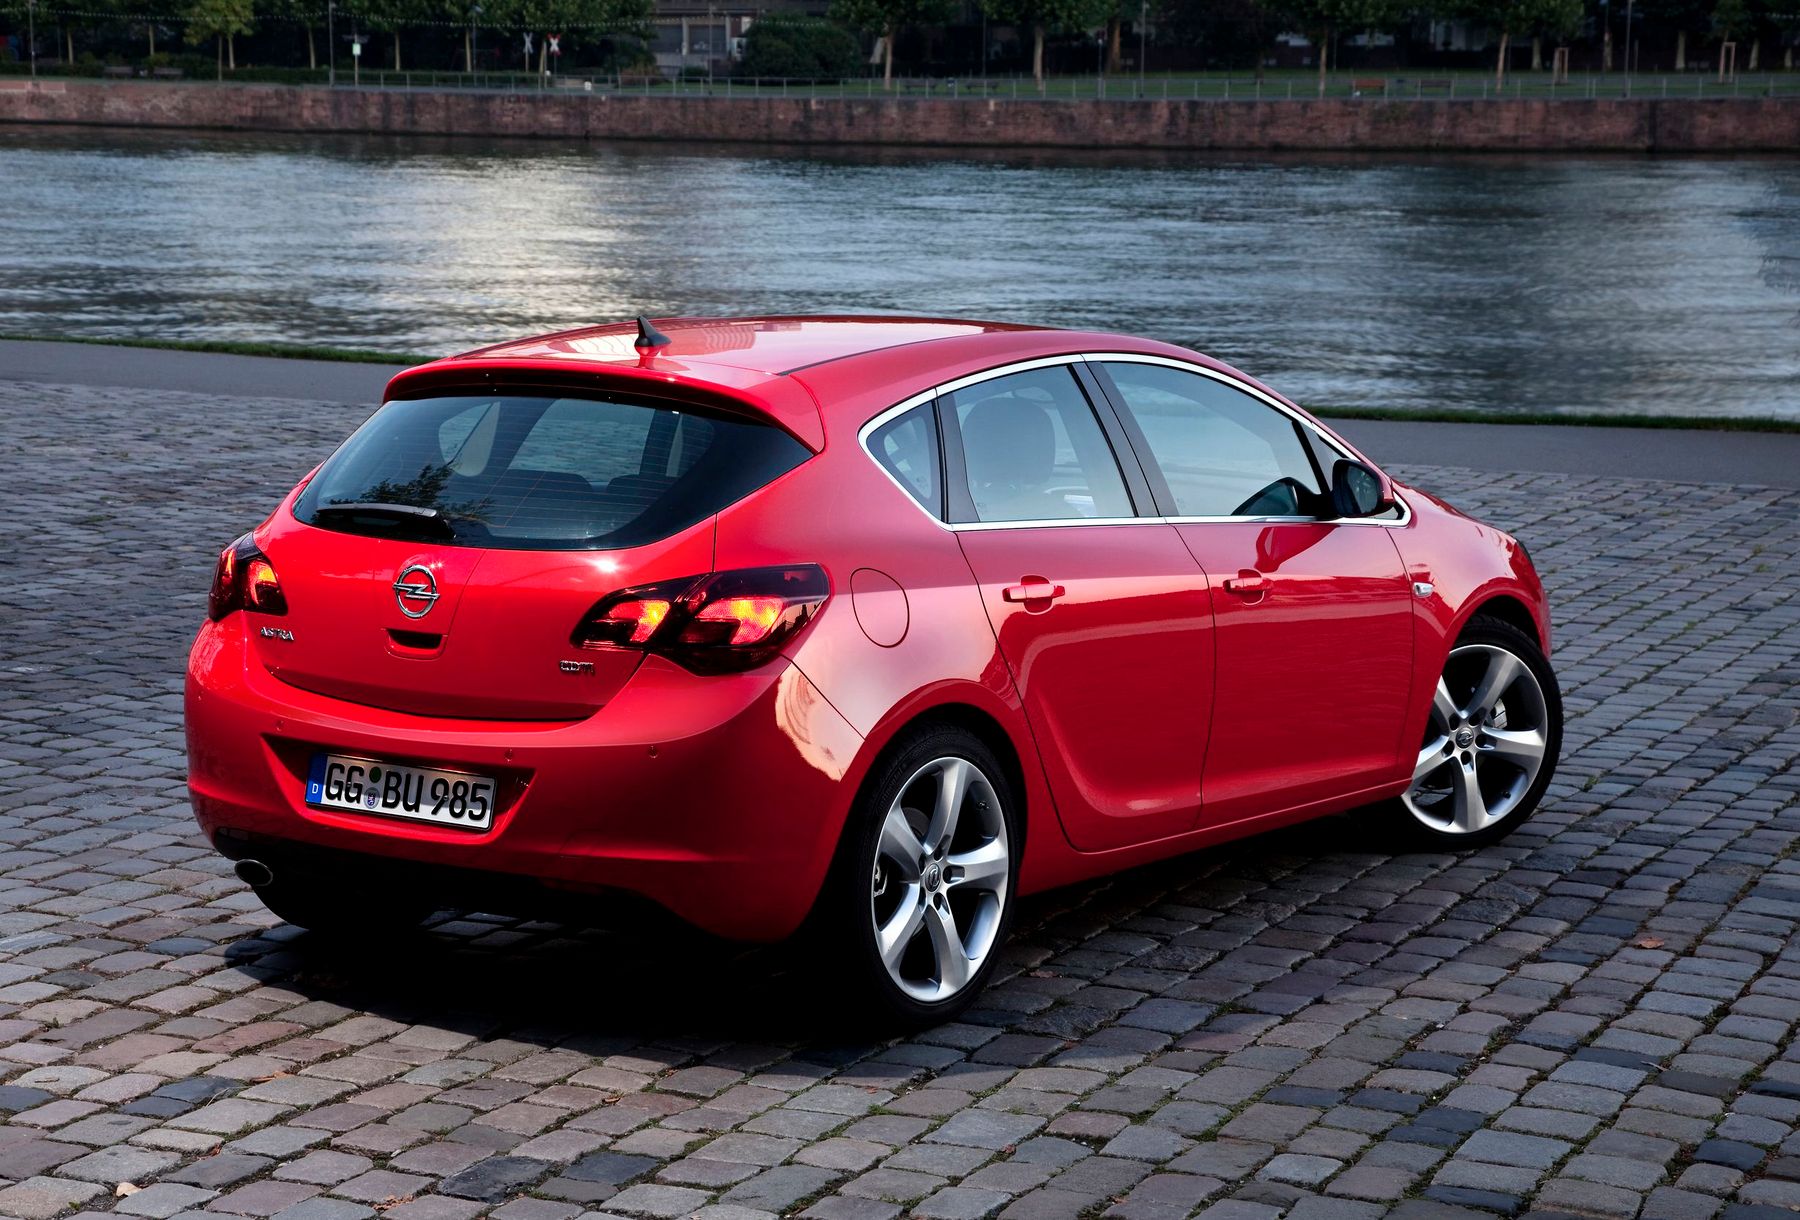 Astra 1.7 download. Opel Astra Hatchback. Opel Astra Hatchback 2010.